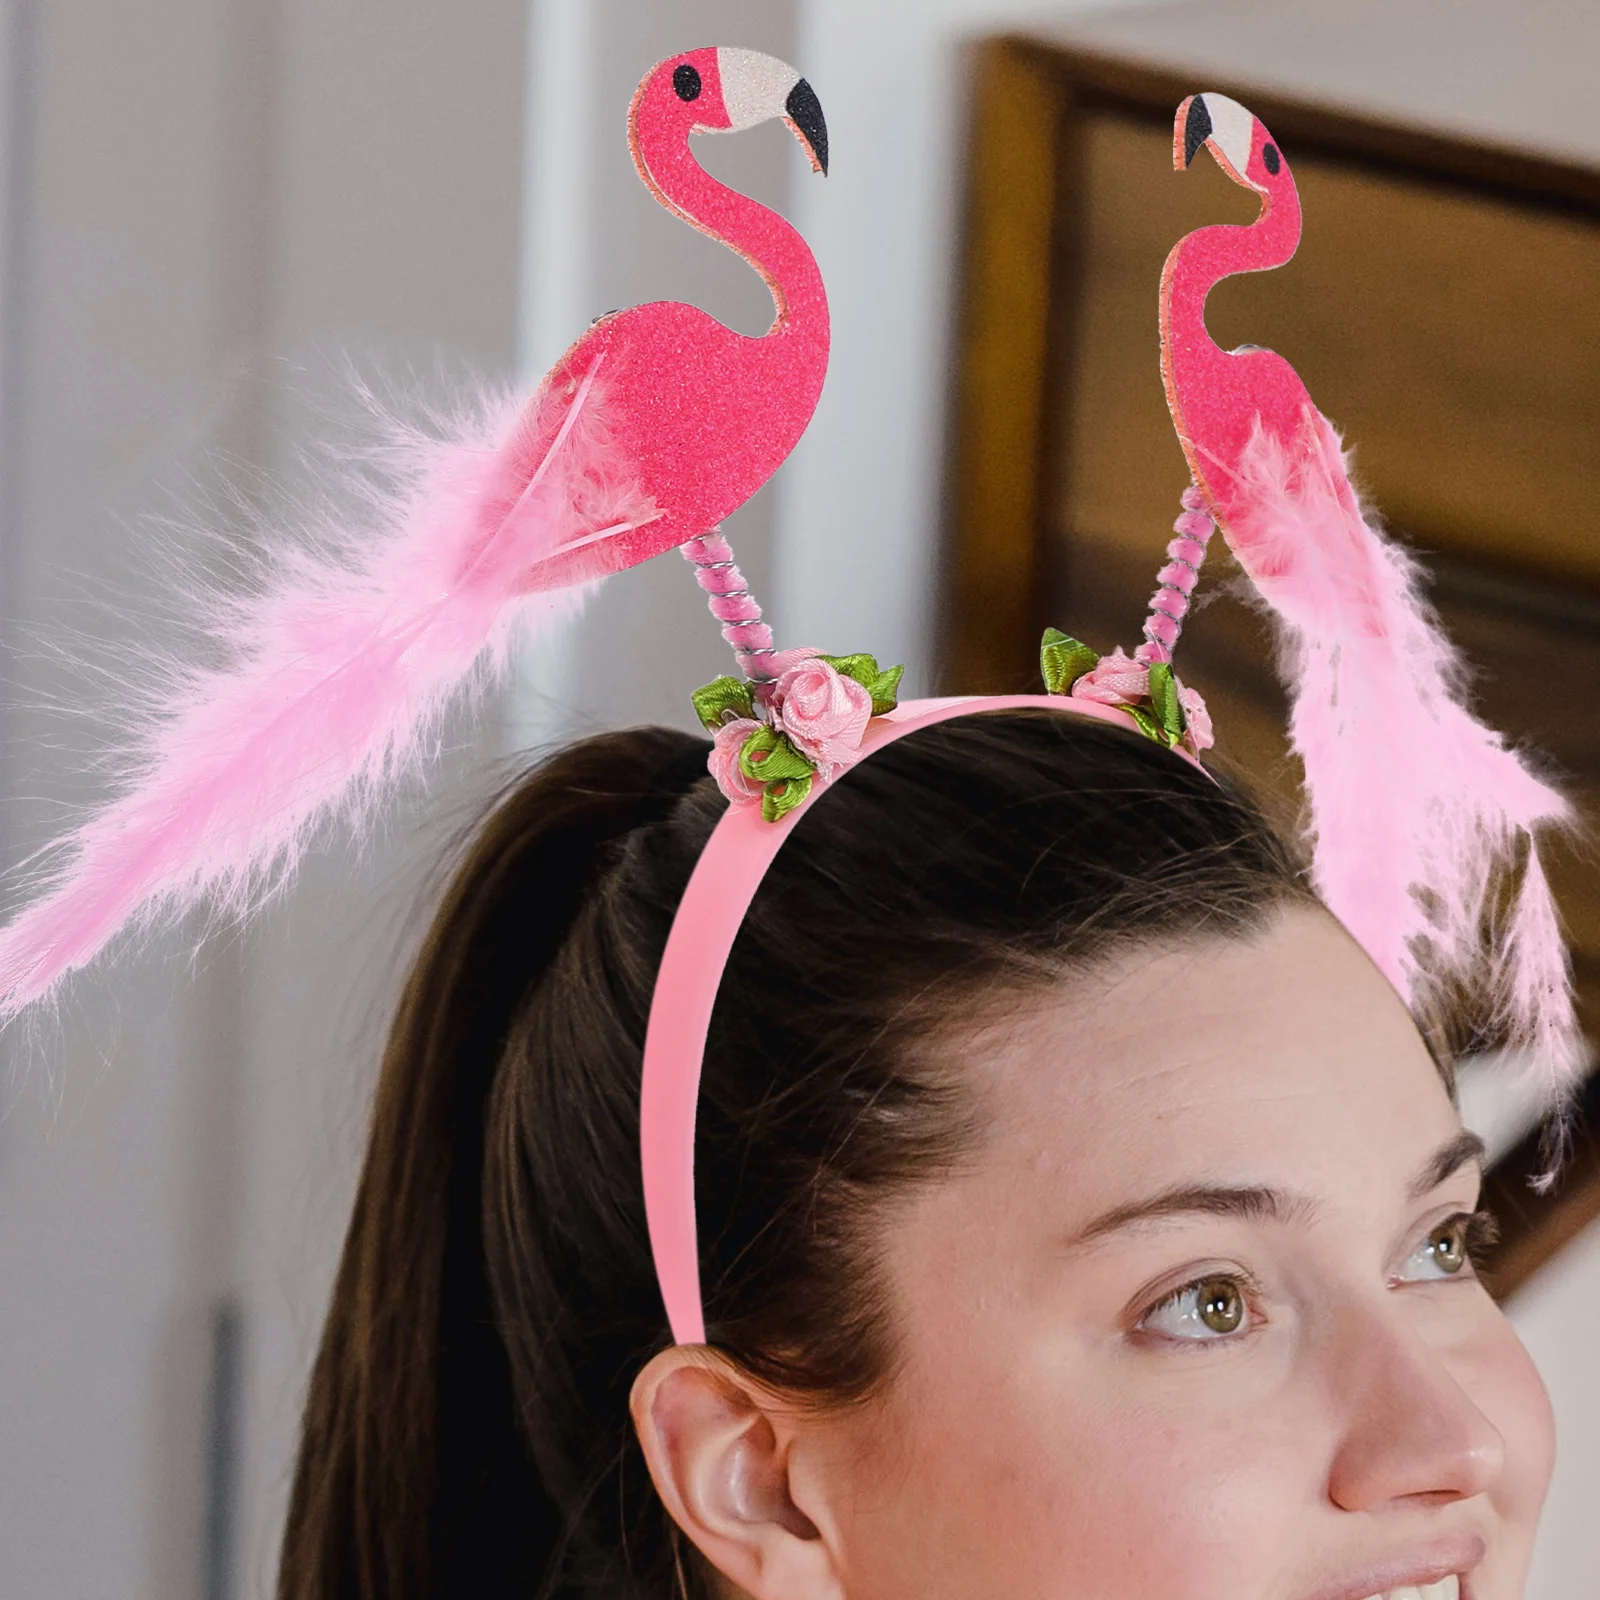 

Beach Hair Accessories Flamingo Headband Headbands Summer Party Cosplay Favor Costume Supplies Headdress Carnival Tropical Miss